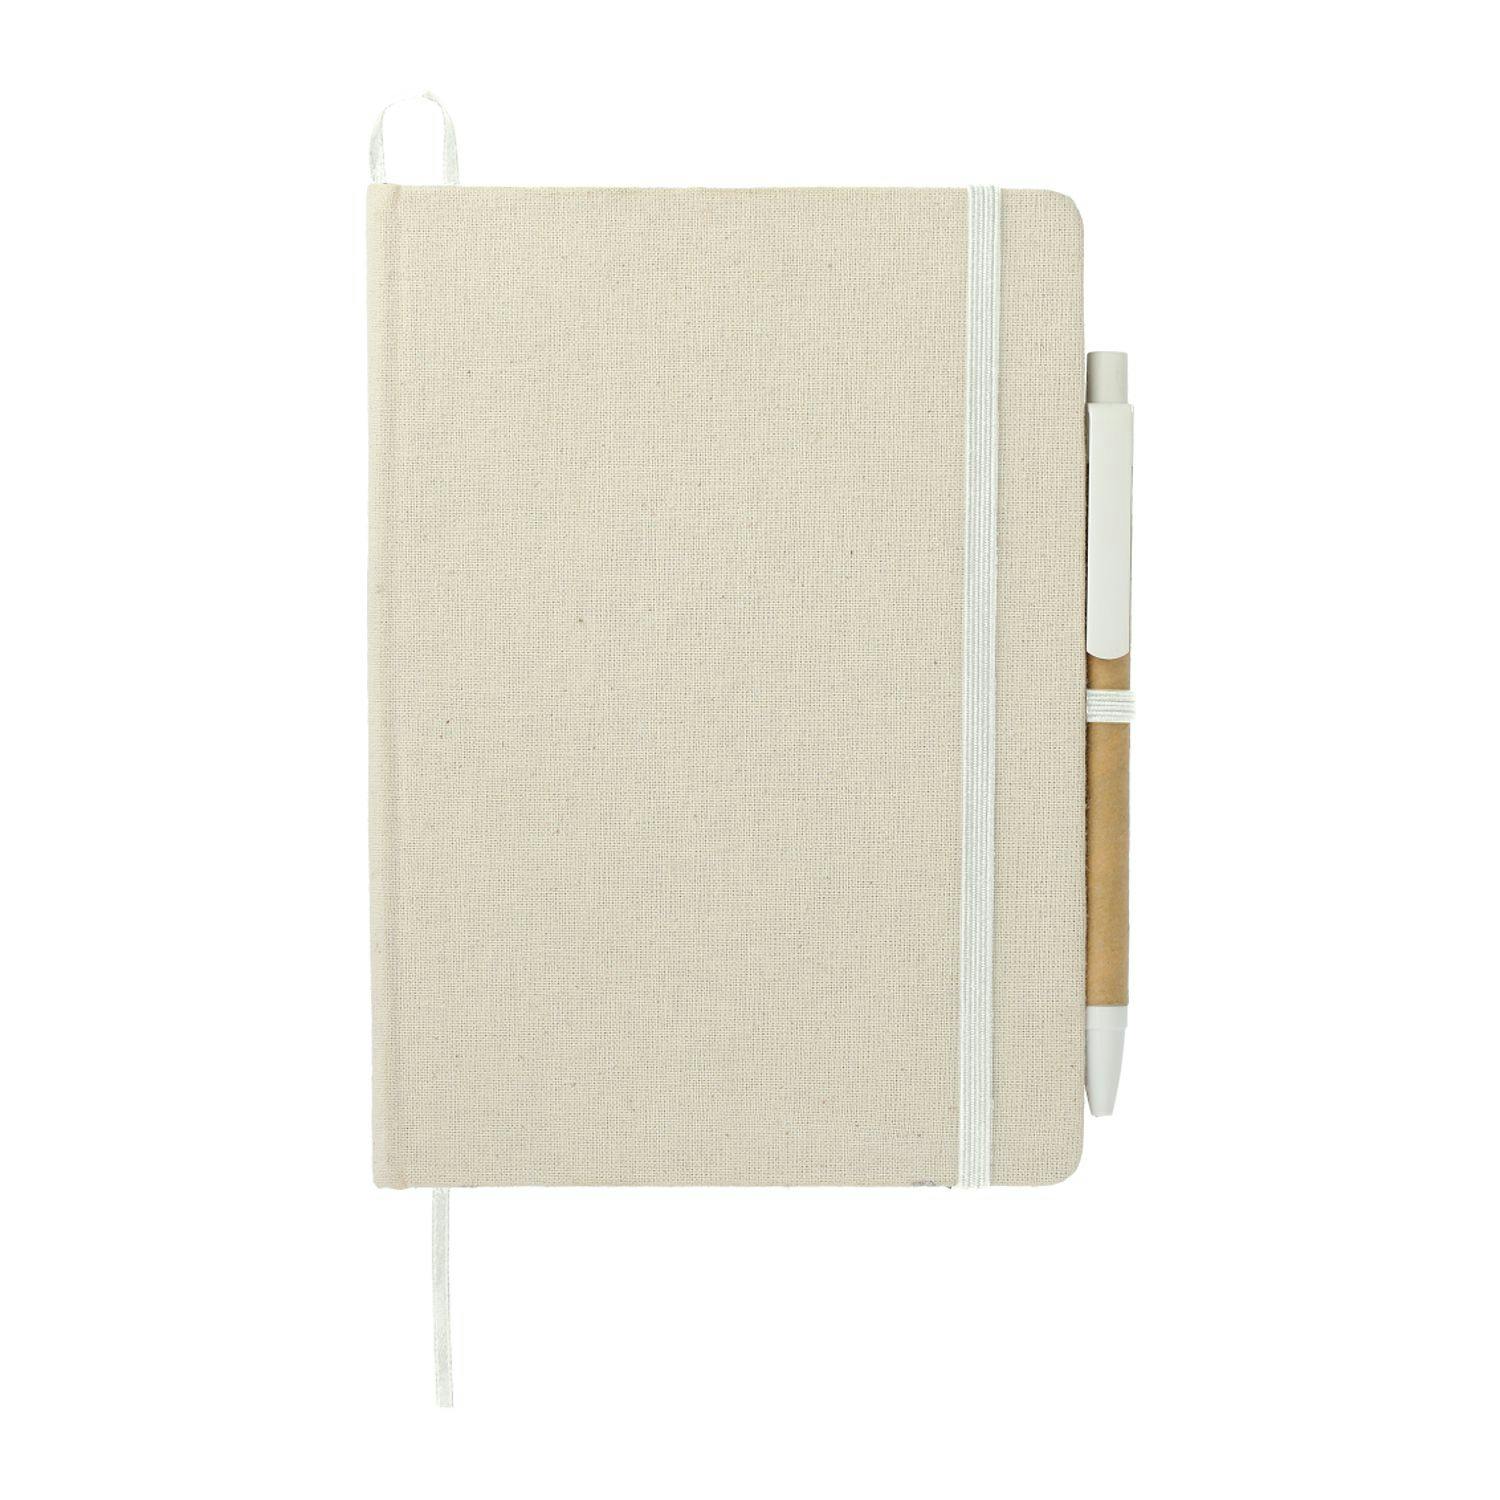 5" x 7" Organic Cotton Bound Notebook w/Pen - additional Image 1